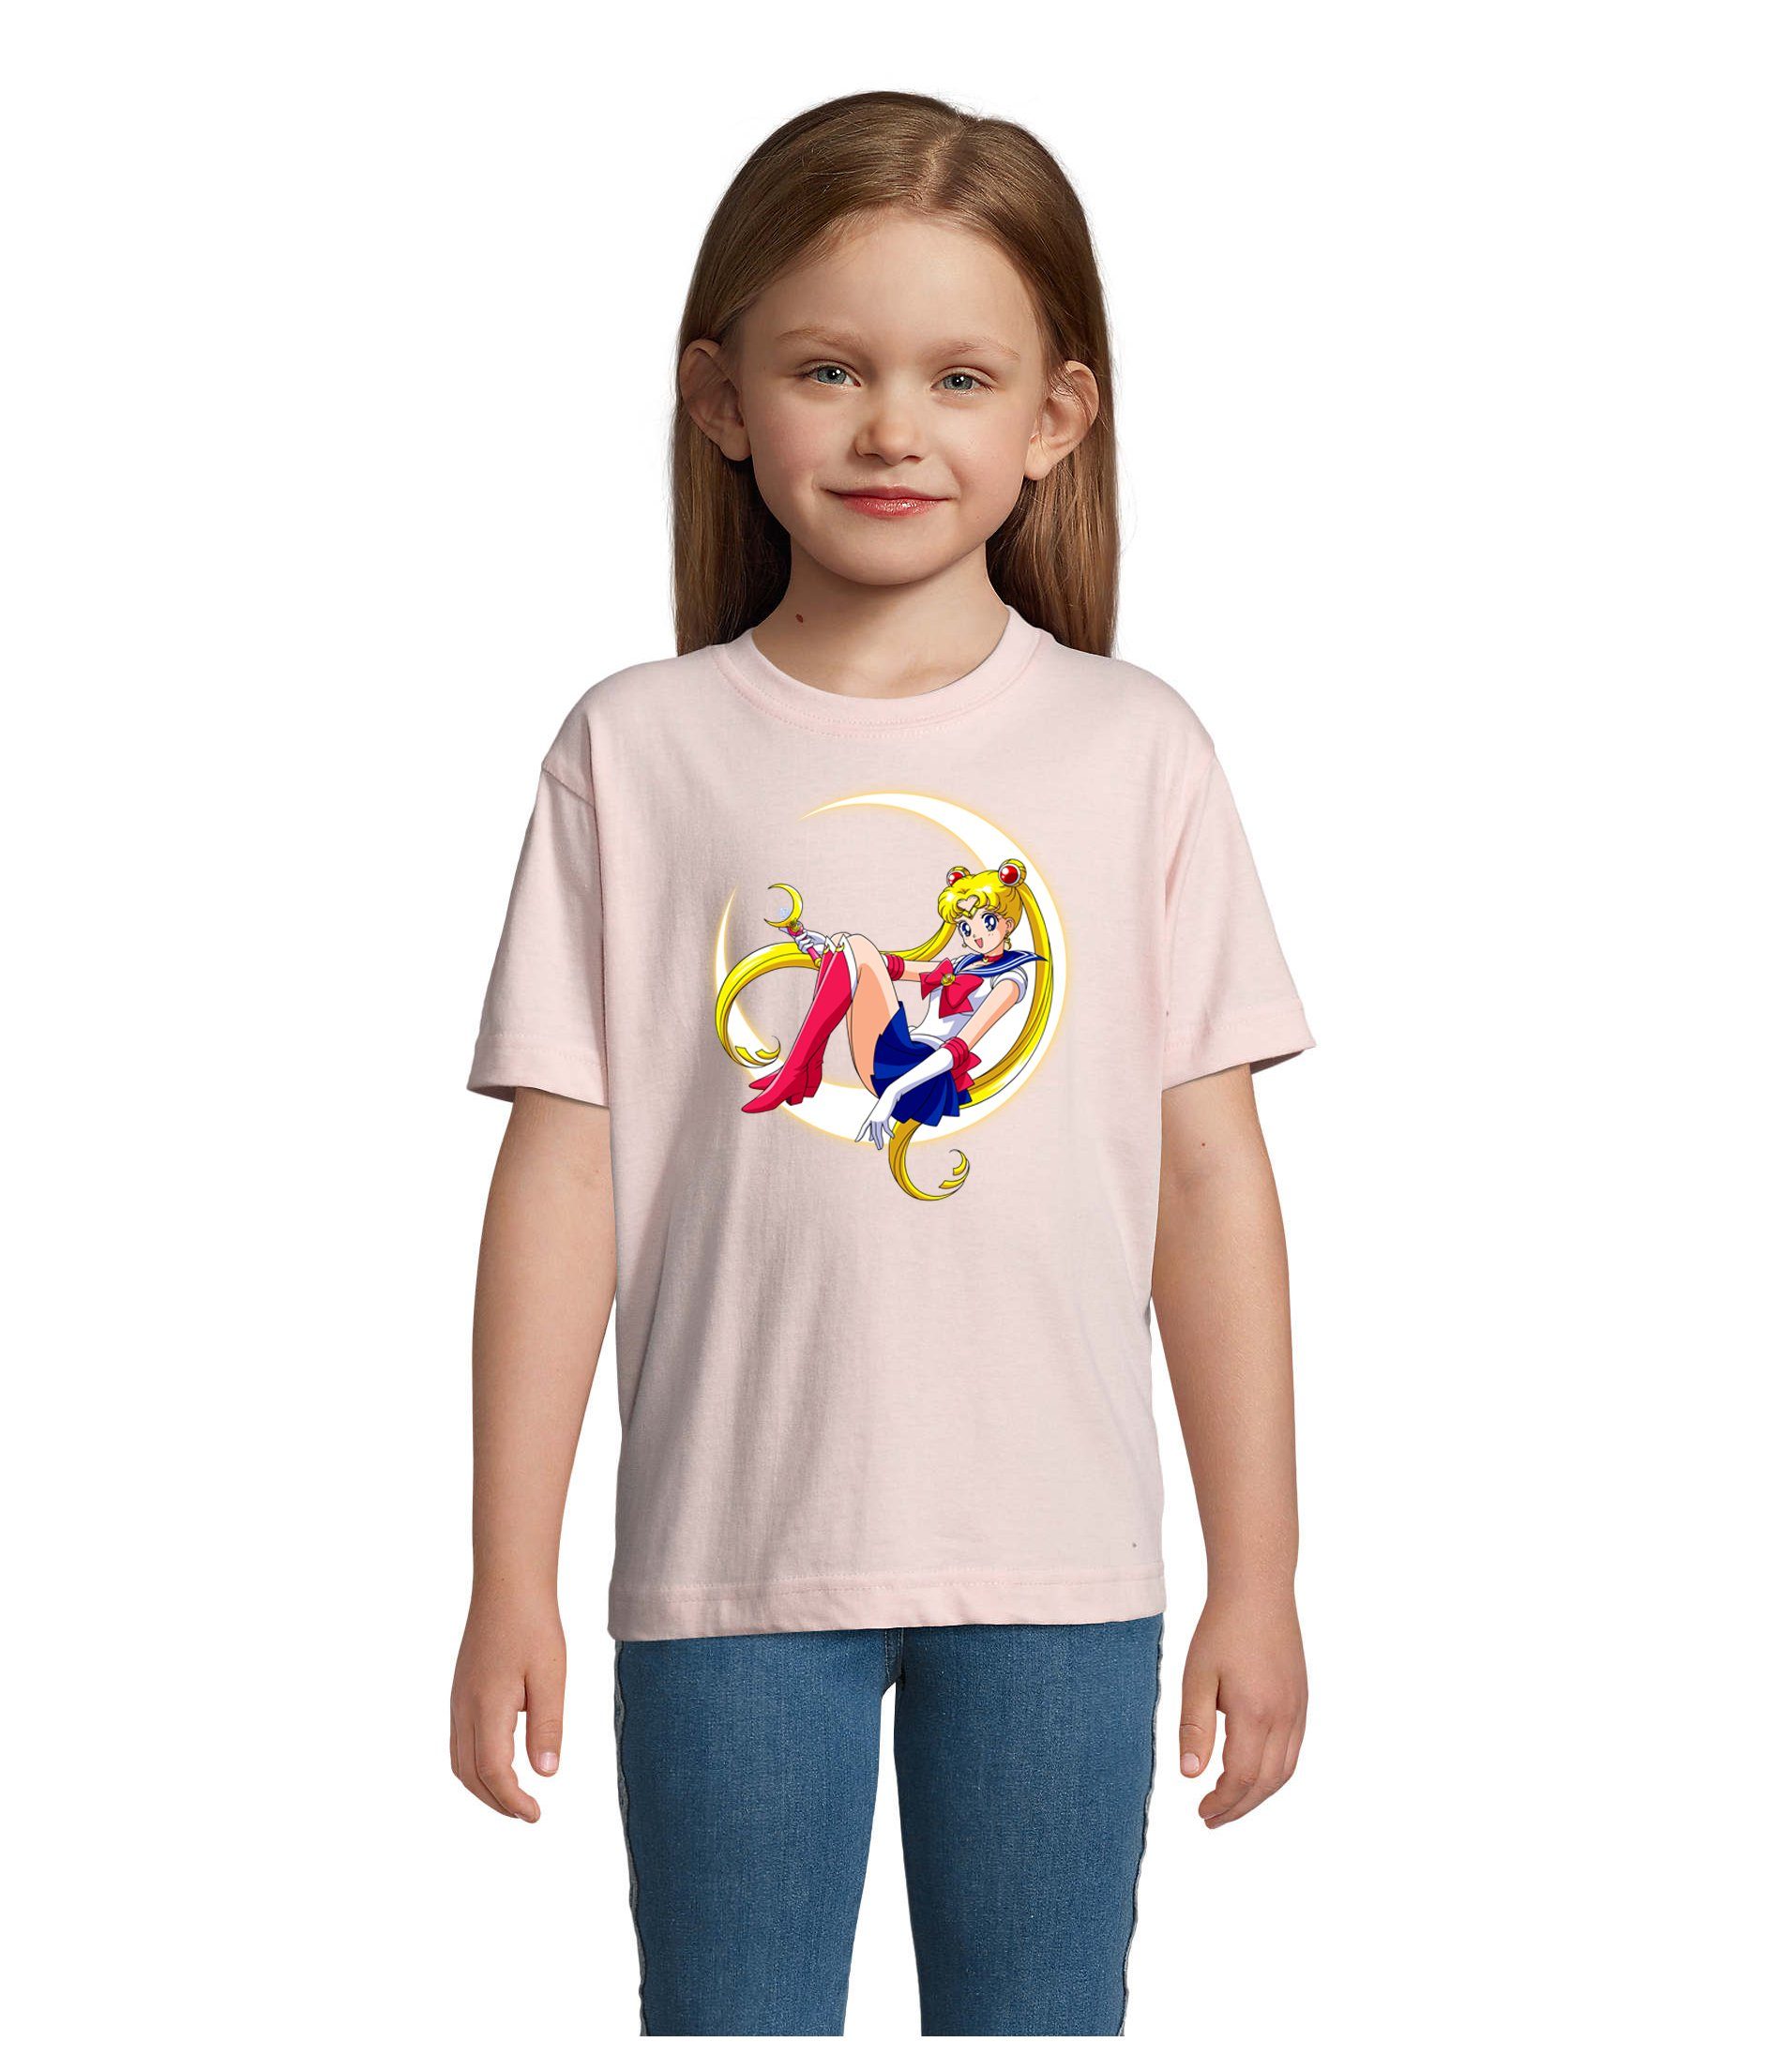 Blondie & Brownie T-Shirt Mädchen Jungen Kinder Fun Comic Sailor Moon Anime Manga Rosa